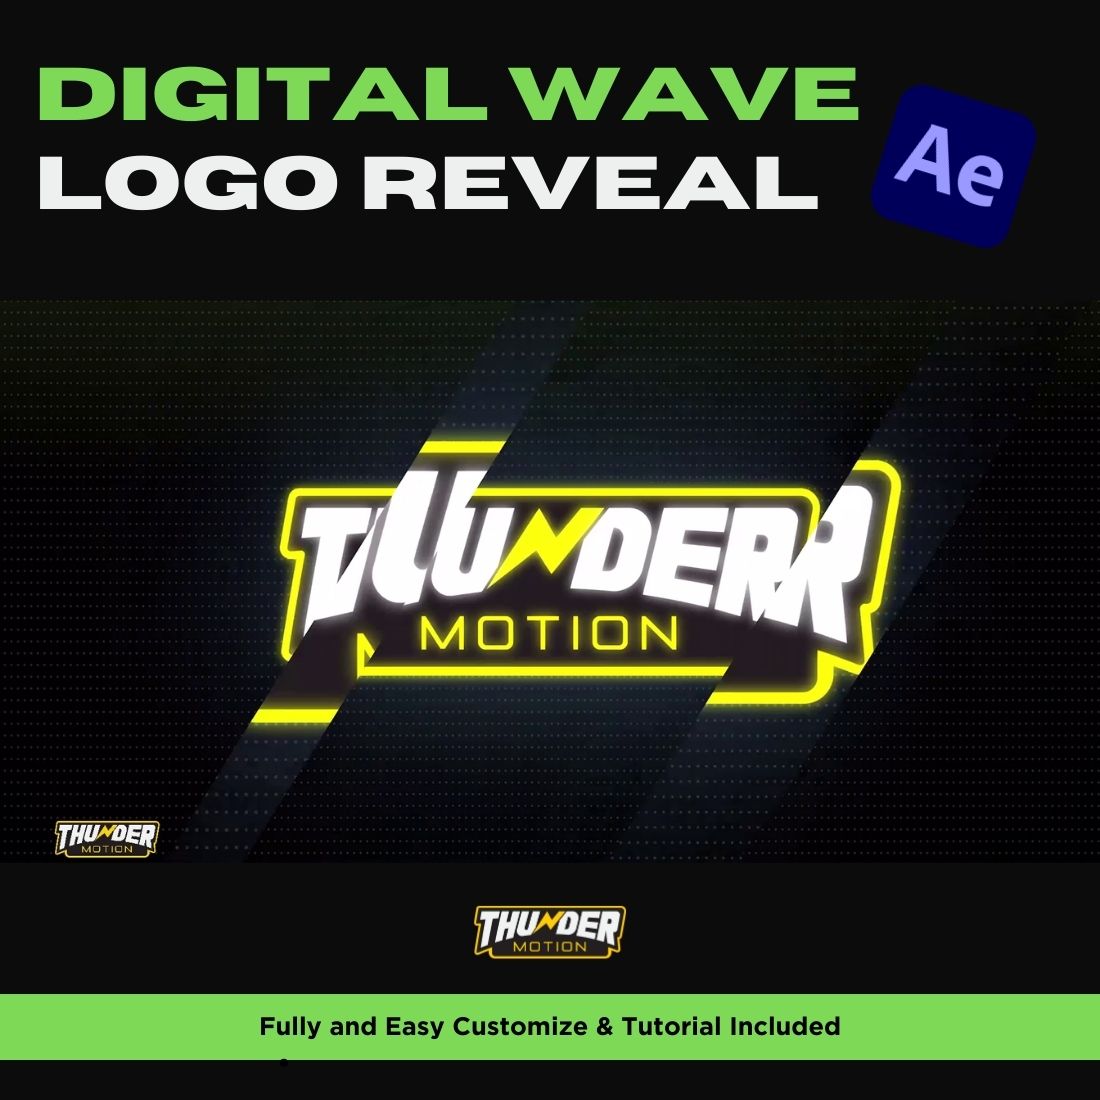 Digital Wave Logo Reveal preview image.